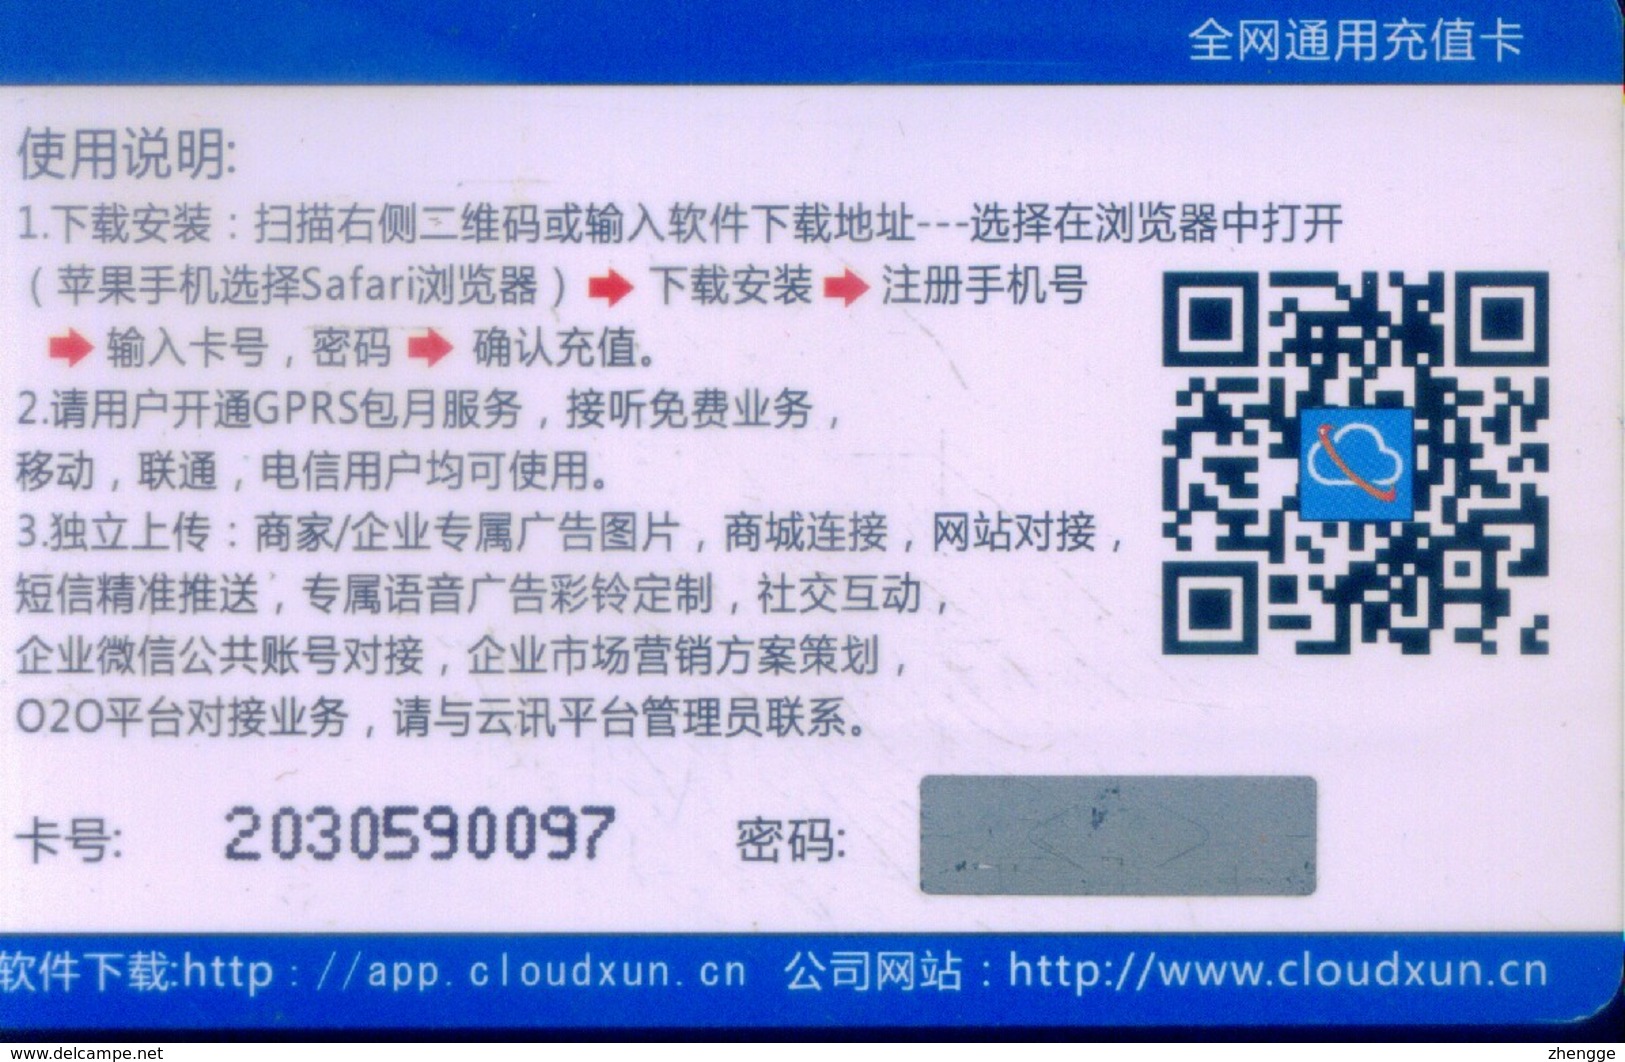 China Cloud Xun Prepaid Cards, Hot Air Balloon, Plane, Recharge For China Mobile, Unicom, Telecom, National Card, (1pcs) - China